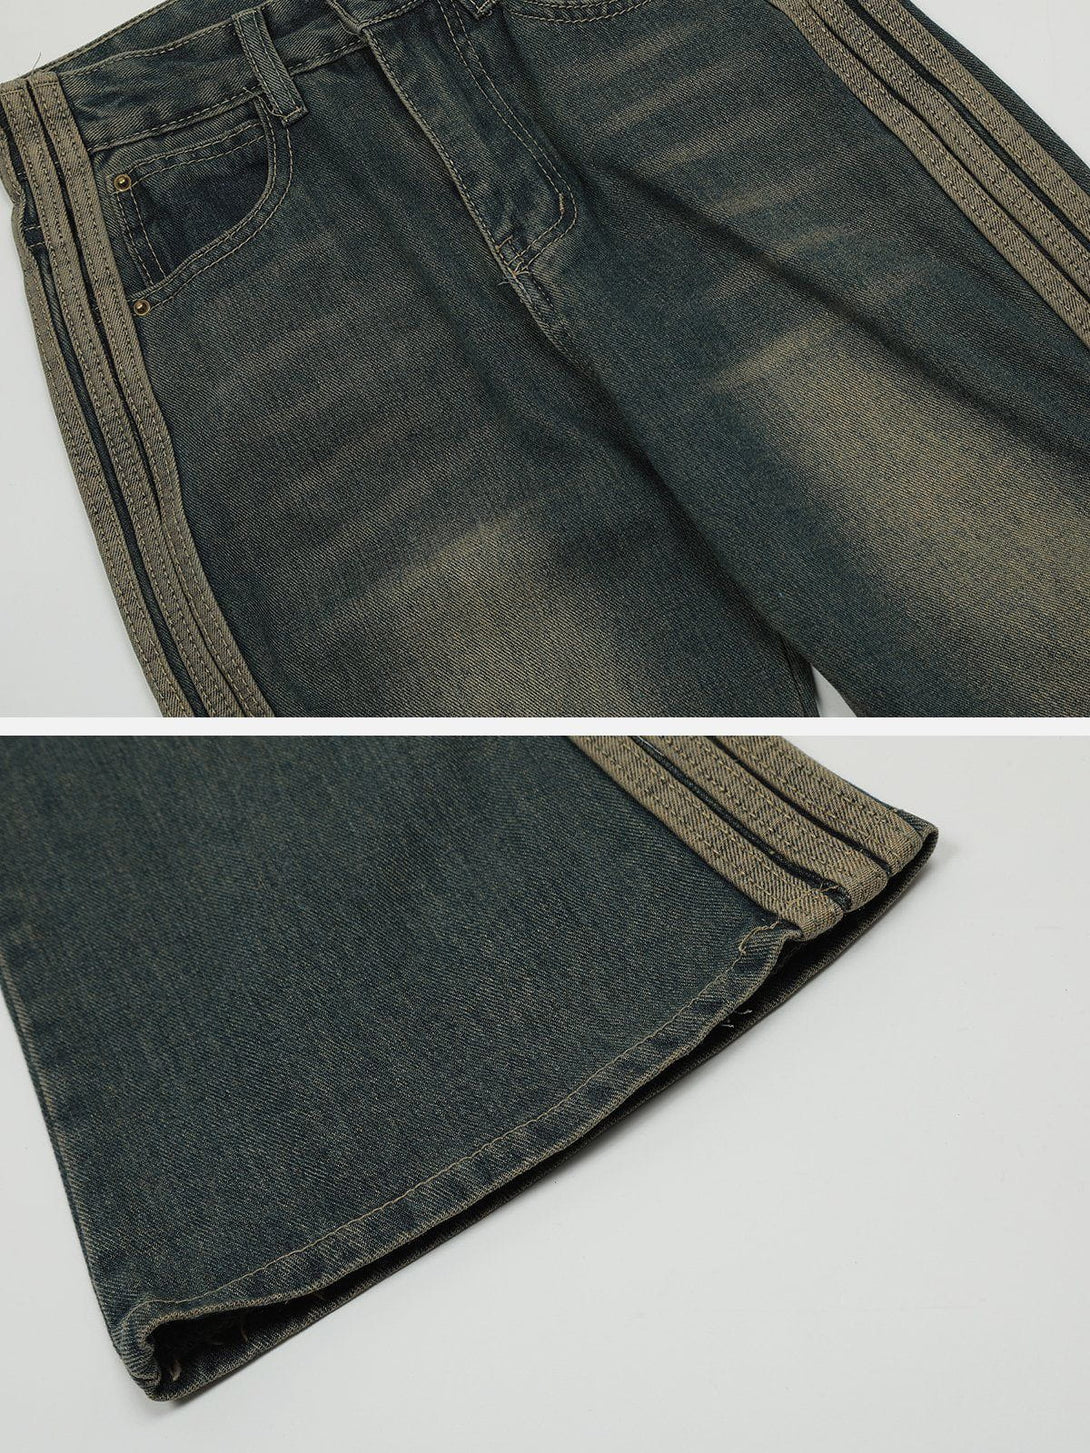 Levefly - Side Patchwork Jeans - Streetwear Fashion - levefly.com